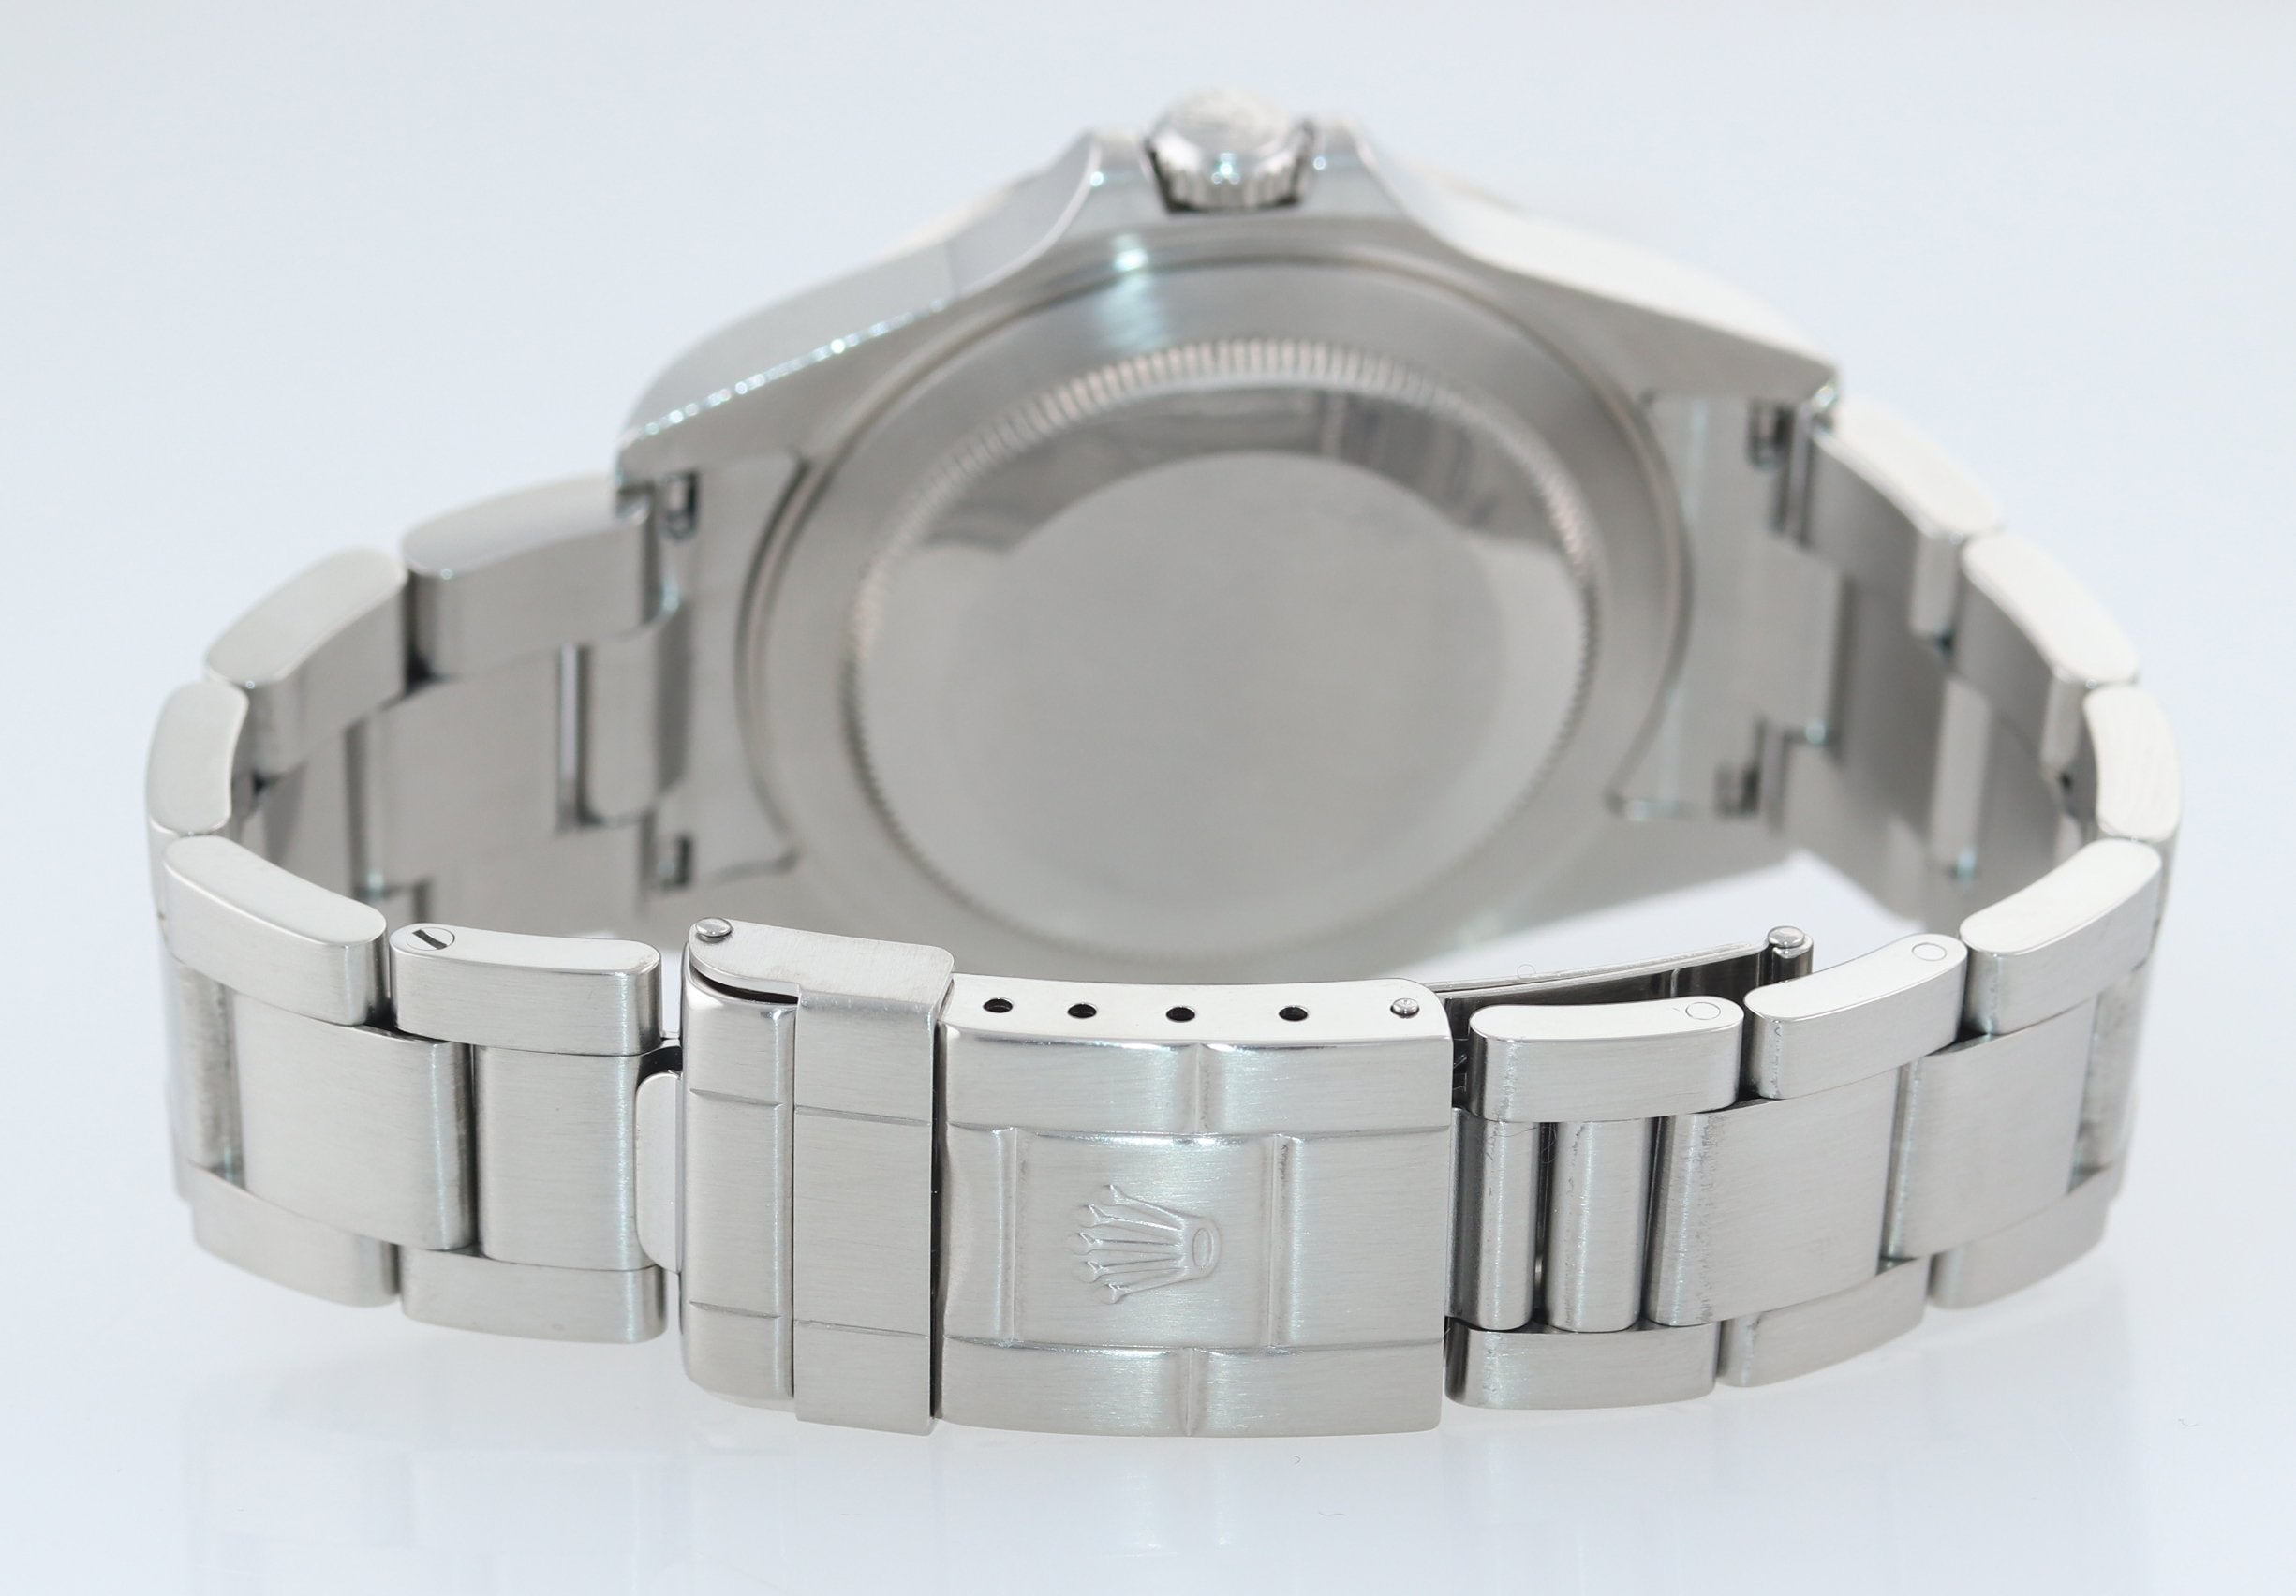 2004 Rolex Explorer II 16570 Stainless Steel Black Date GMT 40mm Watch Box